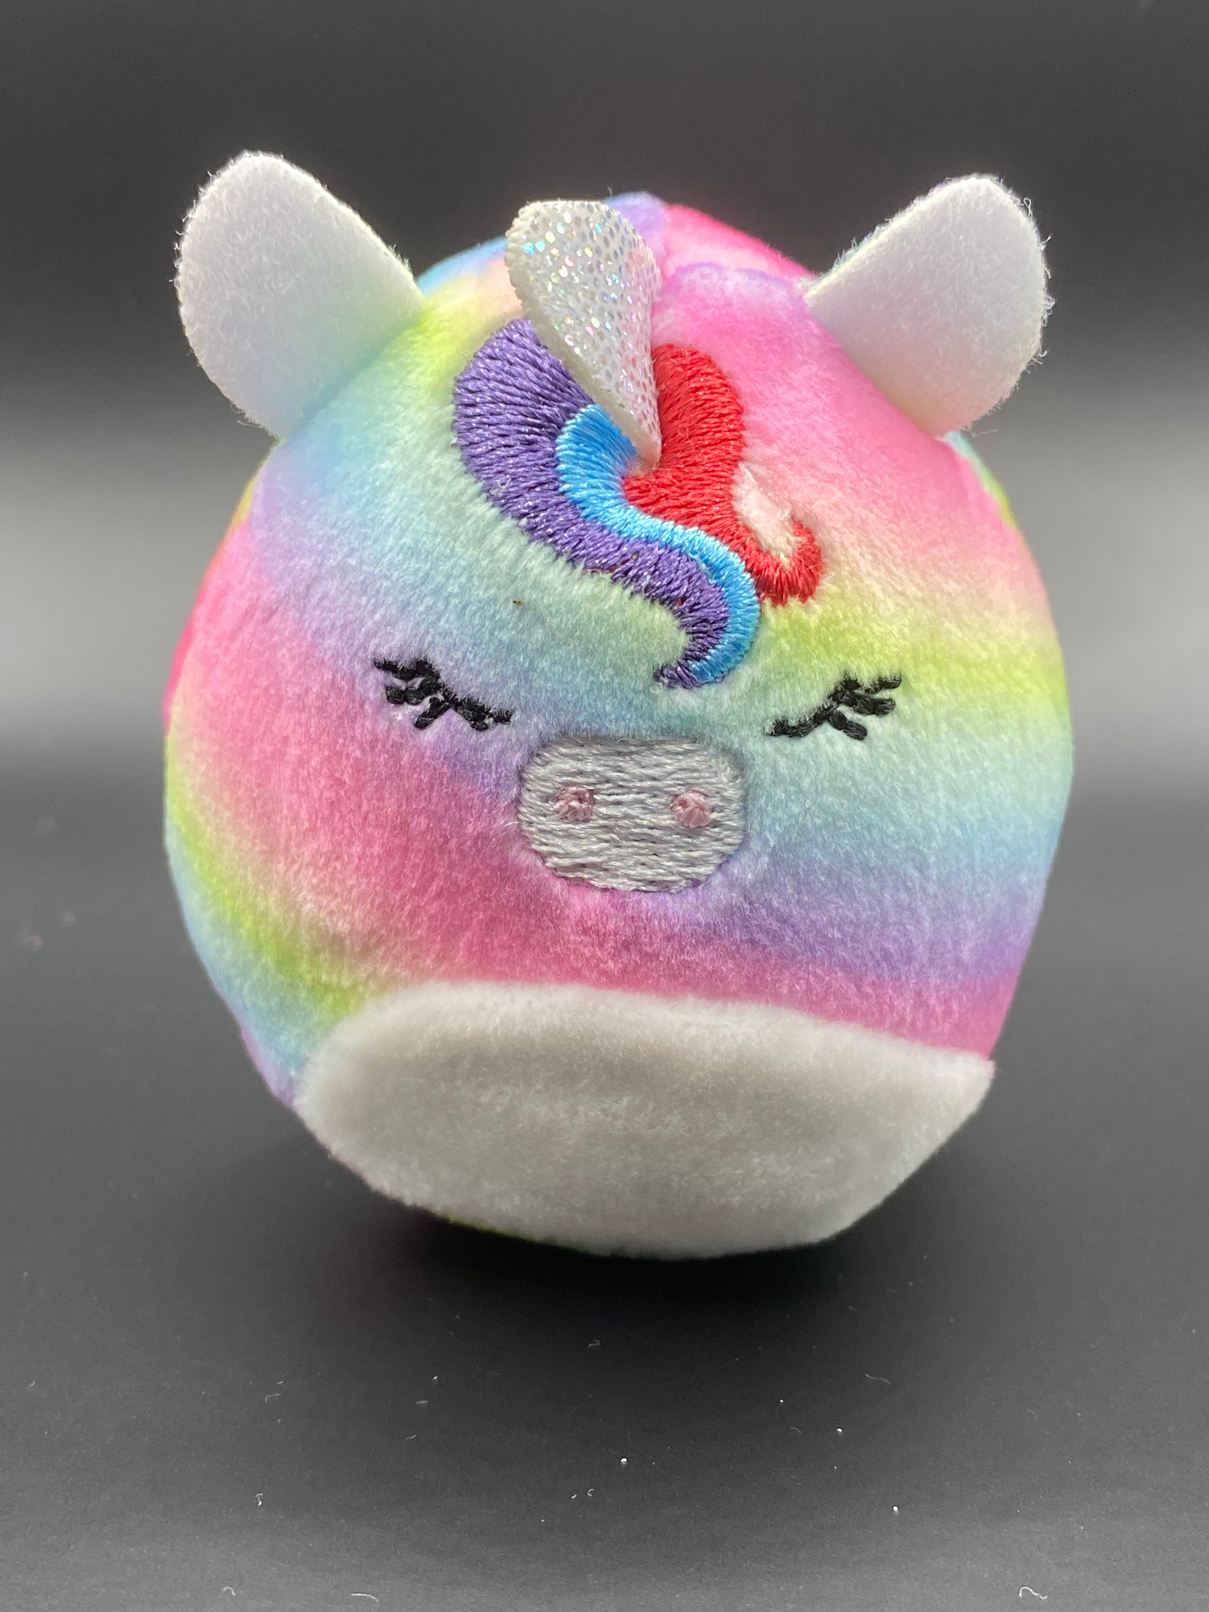 Rainbow Unicorn ~ 2" Individual Squishville by Squishmallows